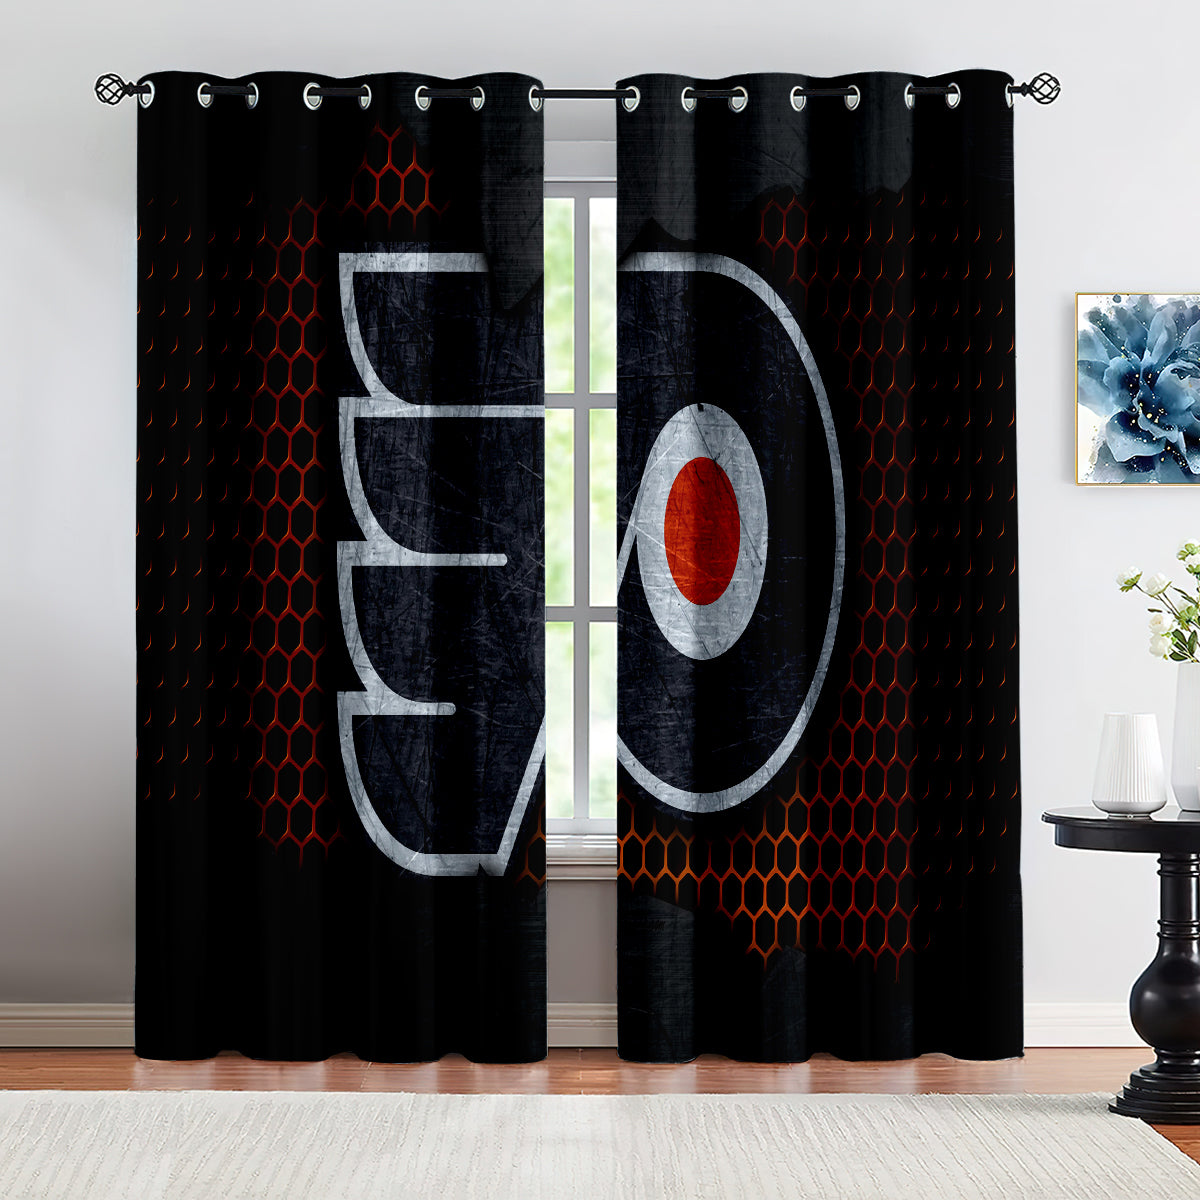 Philadelphia Flyers Hockey League Blackout Curtains Drapes For Window Treatment Set